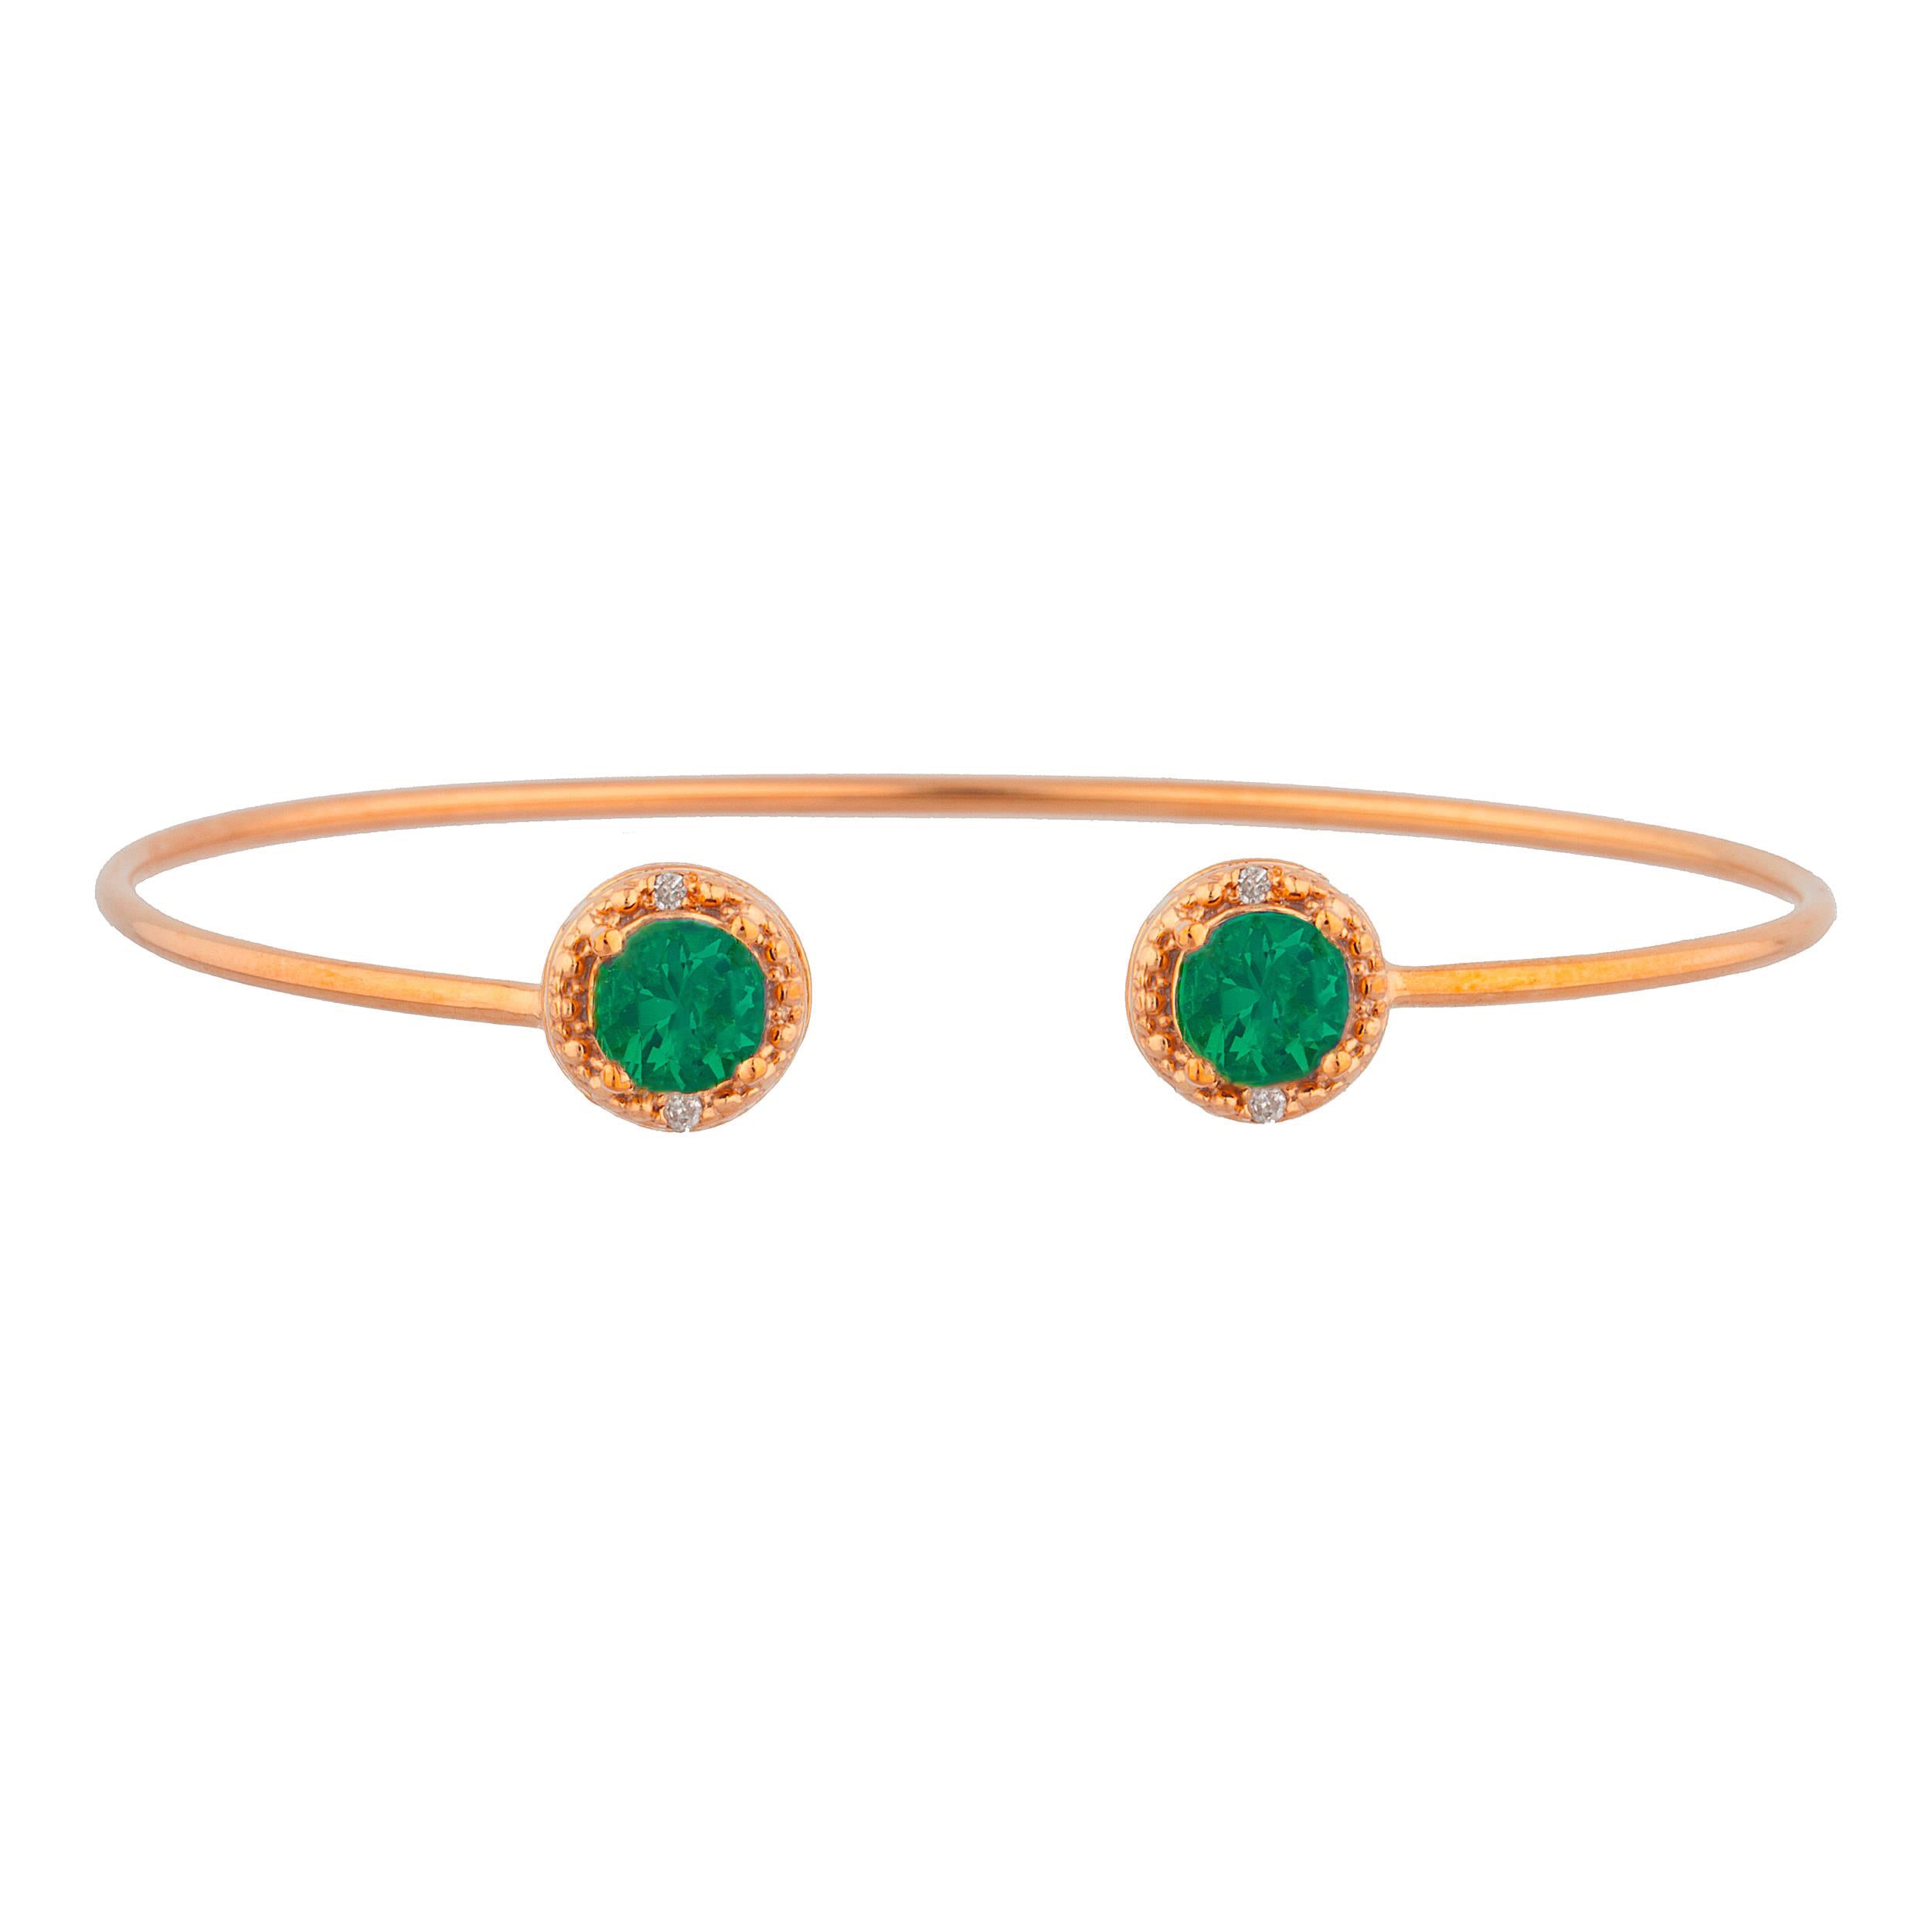 14Kt Gold Emerald & Diamond Round Bangle Bracelet